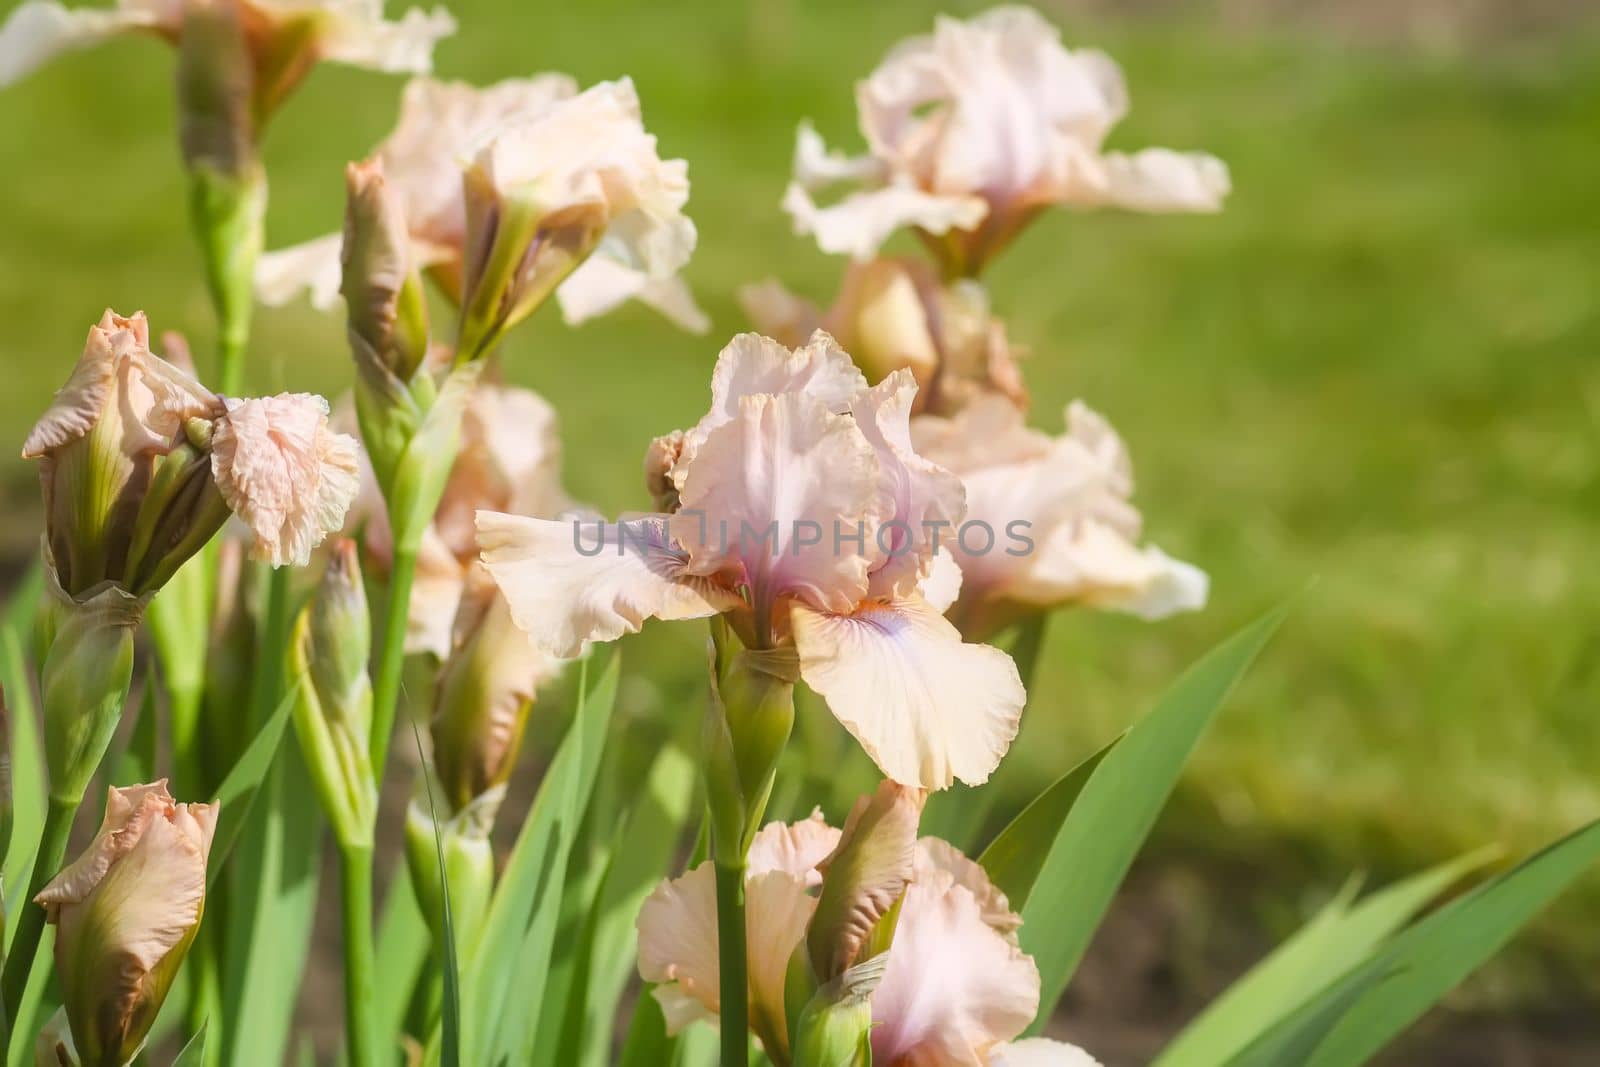 Iris flowers in spring garden.